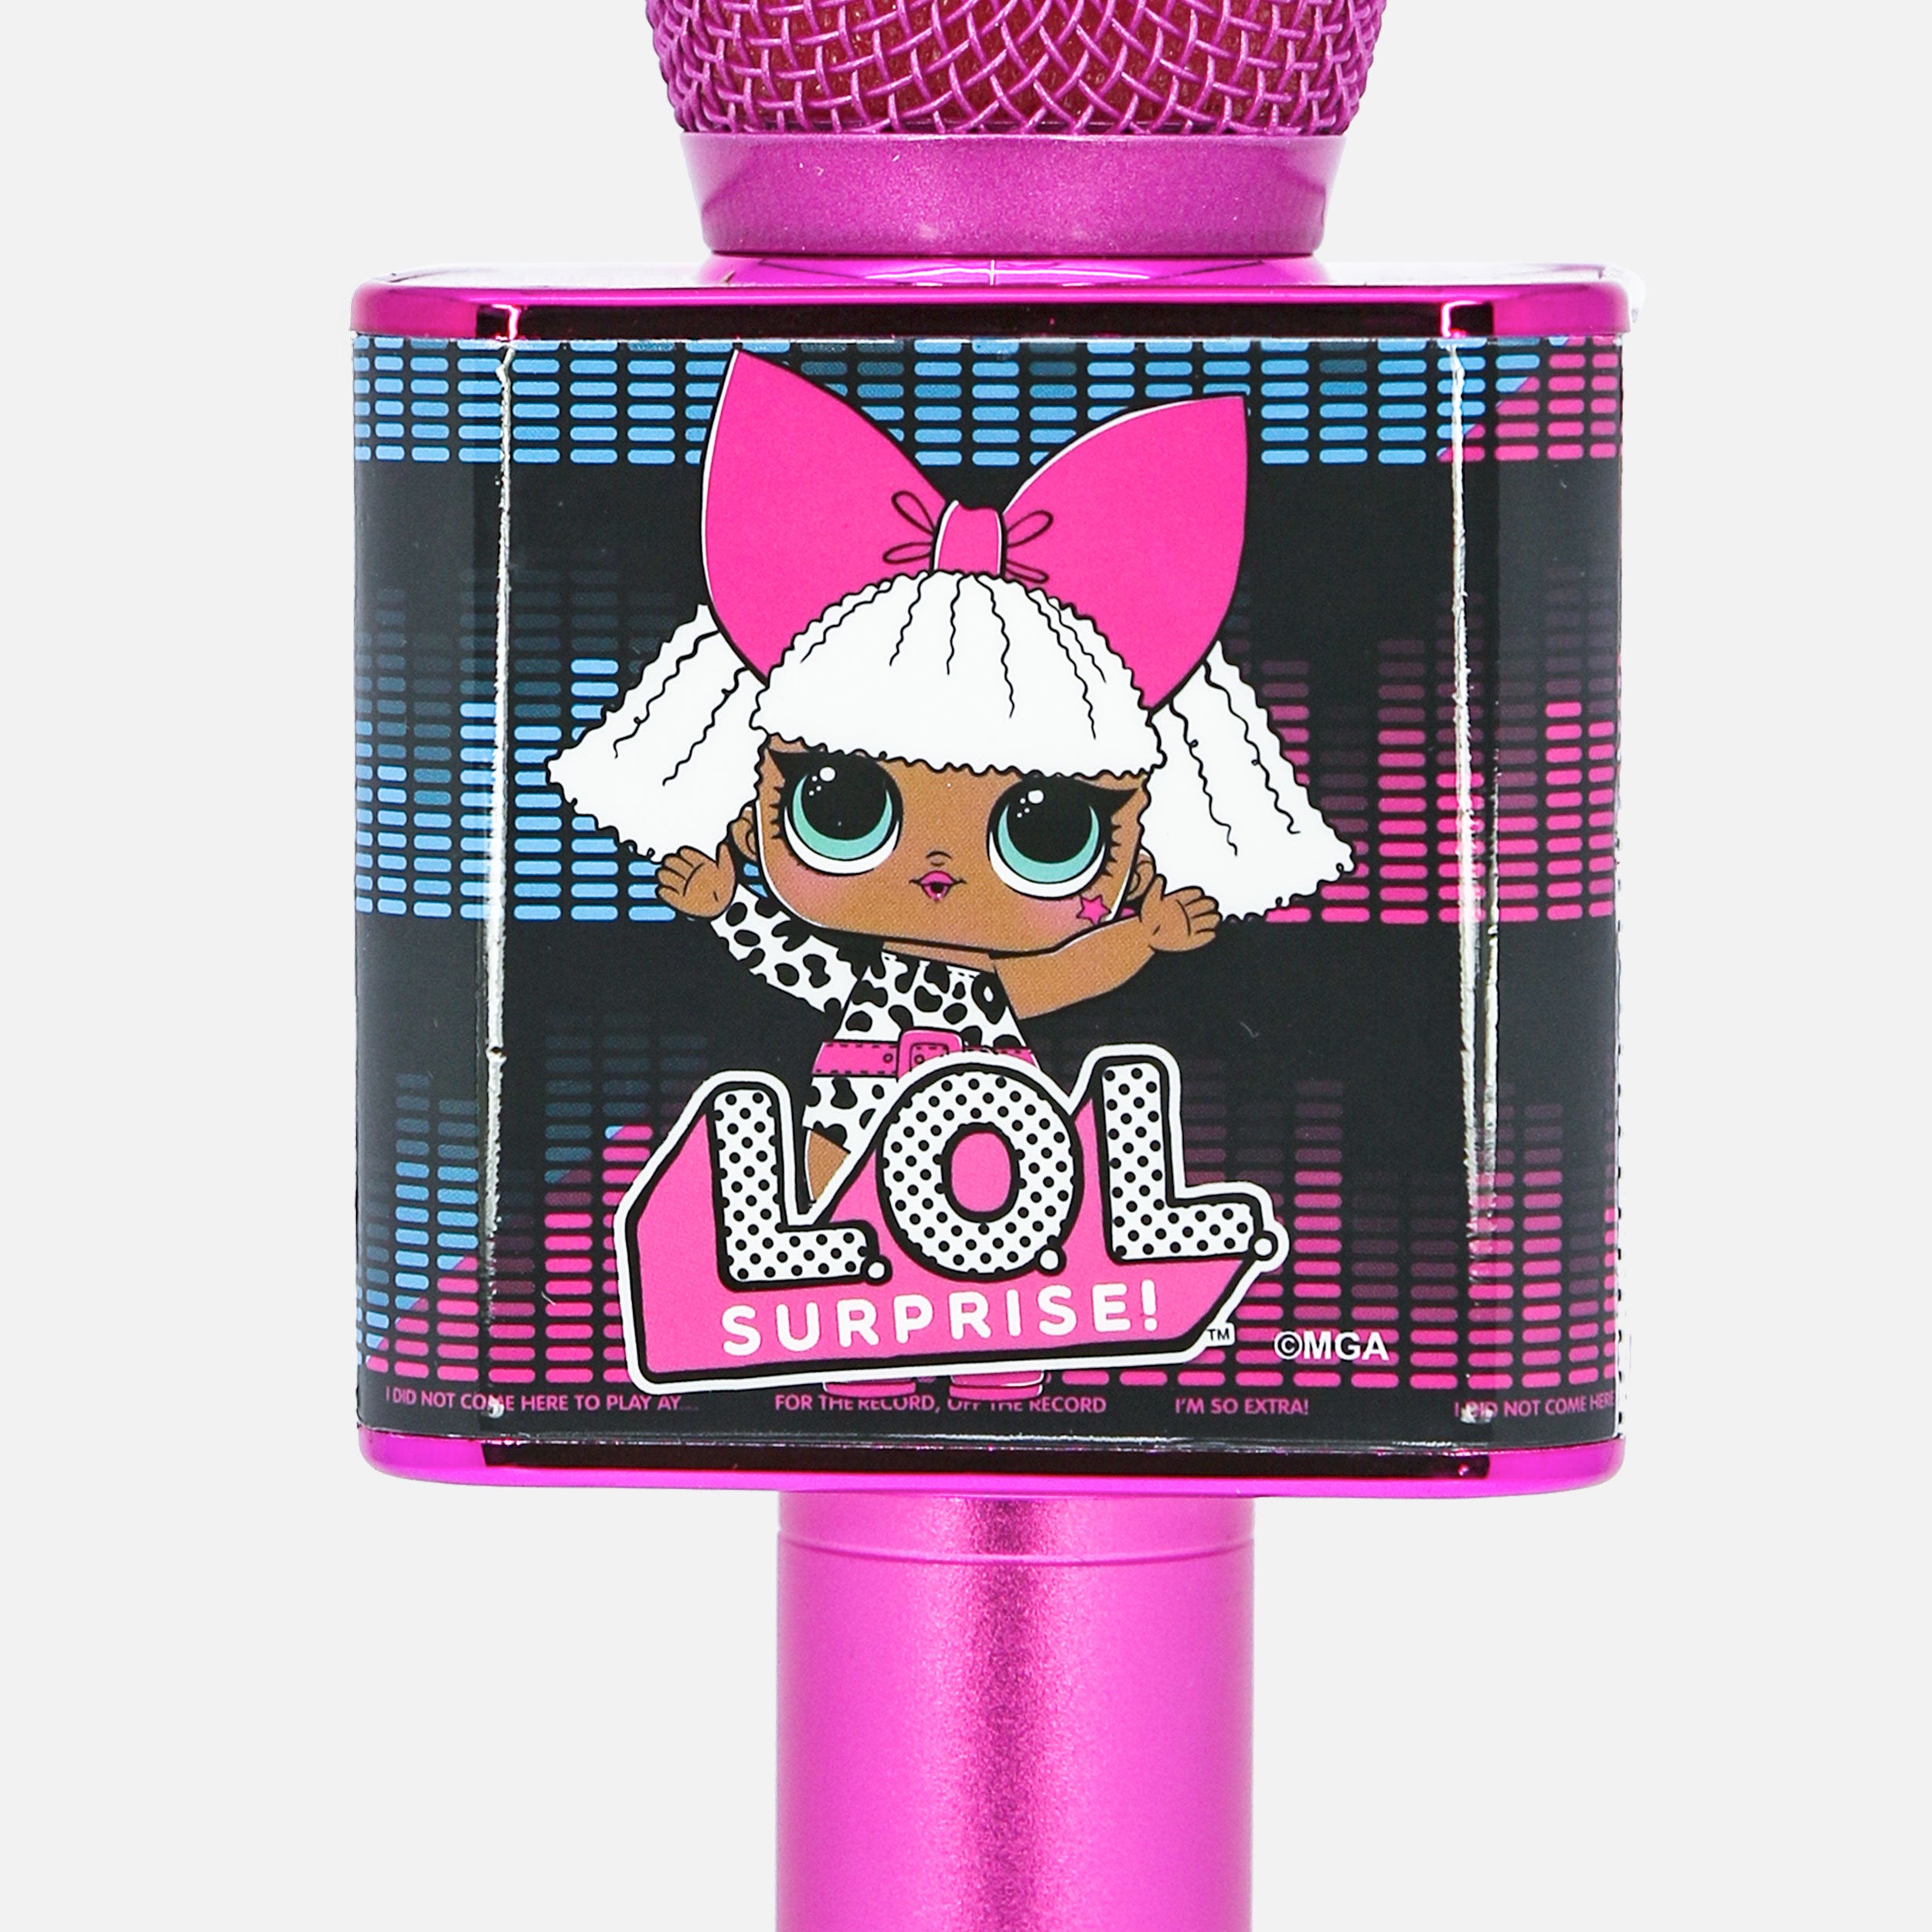 Microphone OTL Lol Surprise Karaoke - Albagame